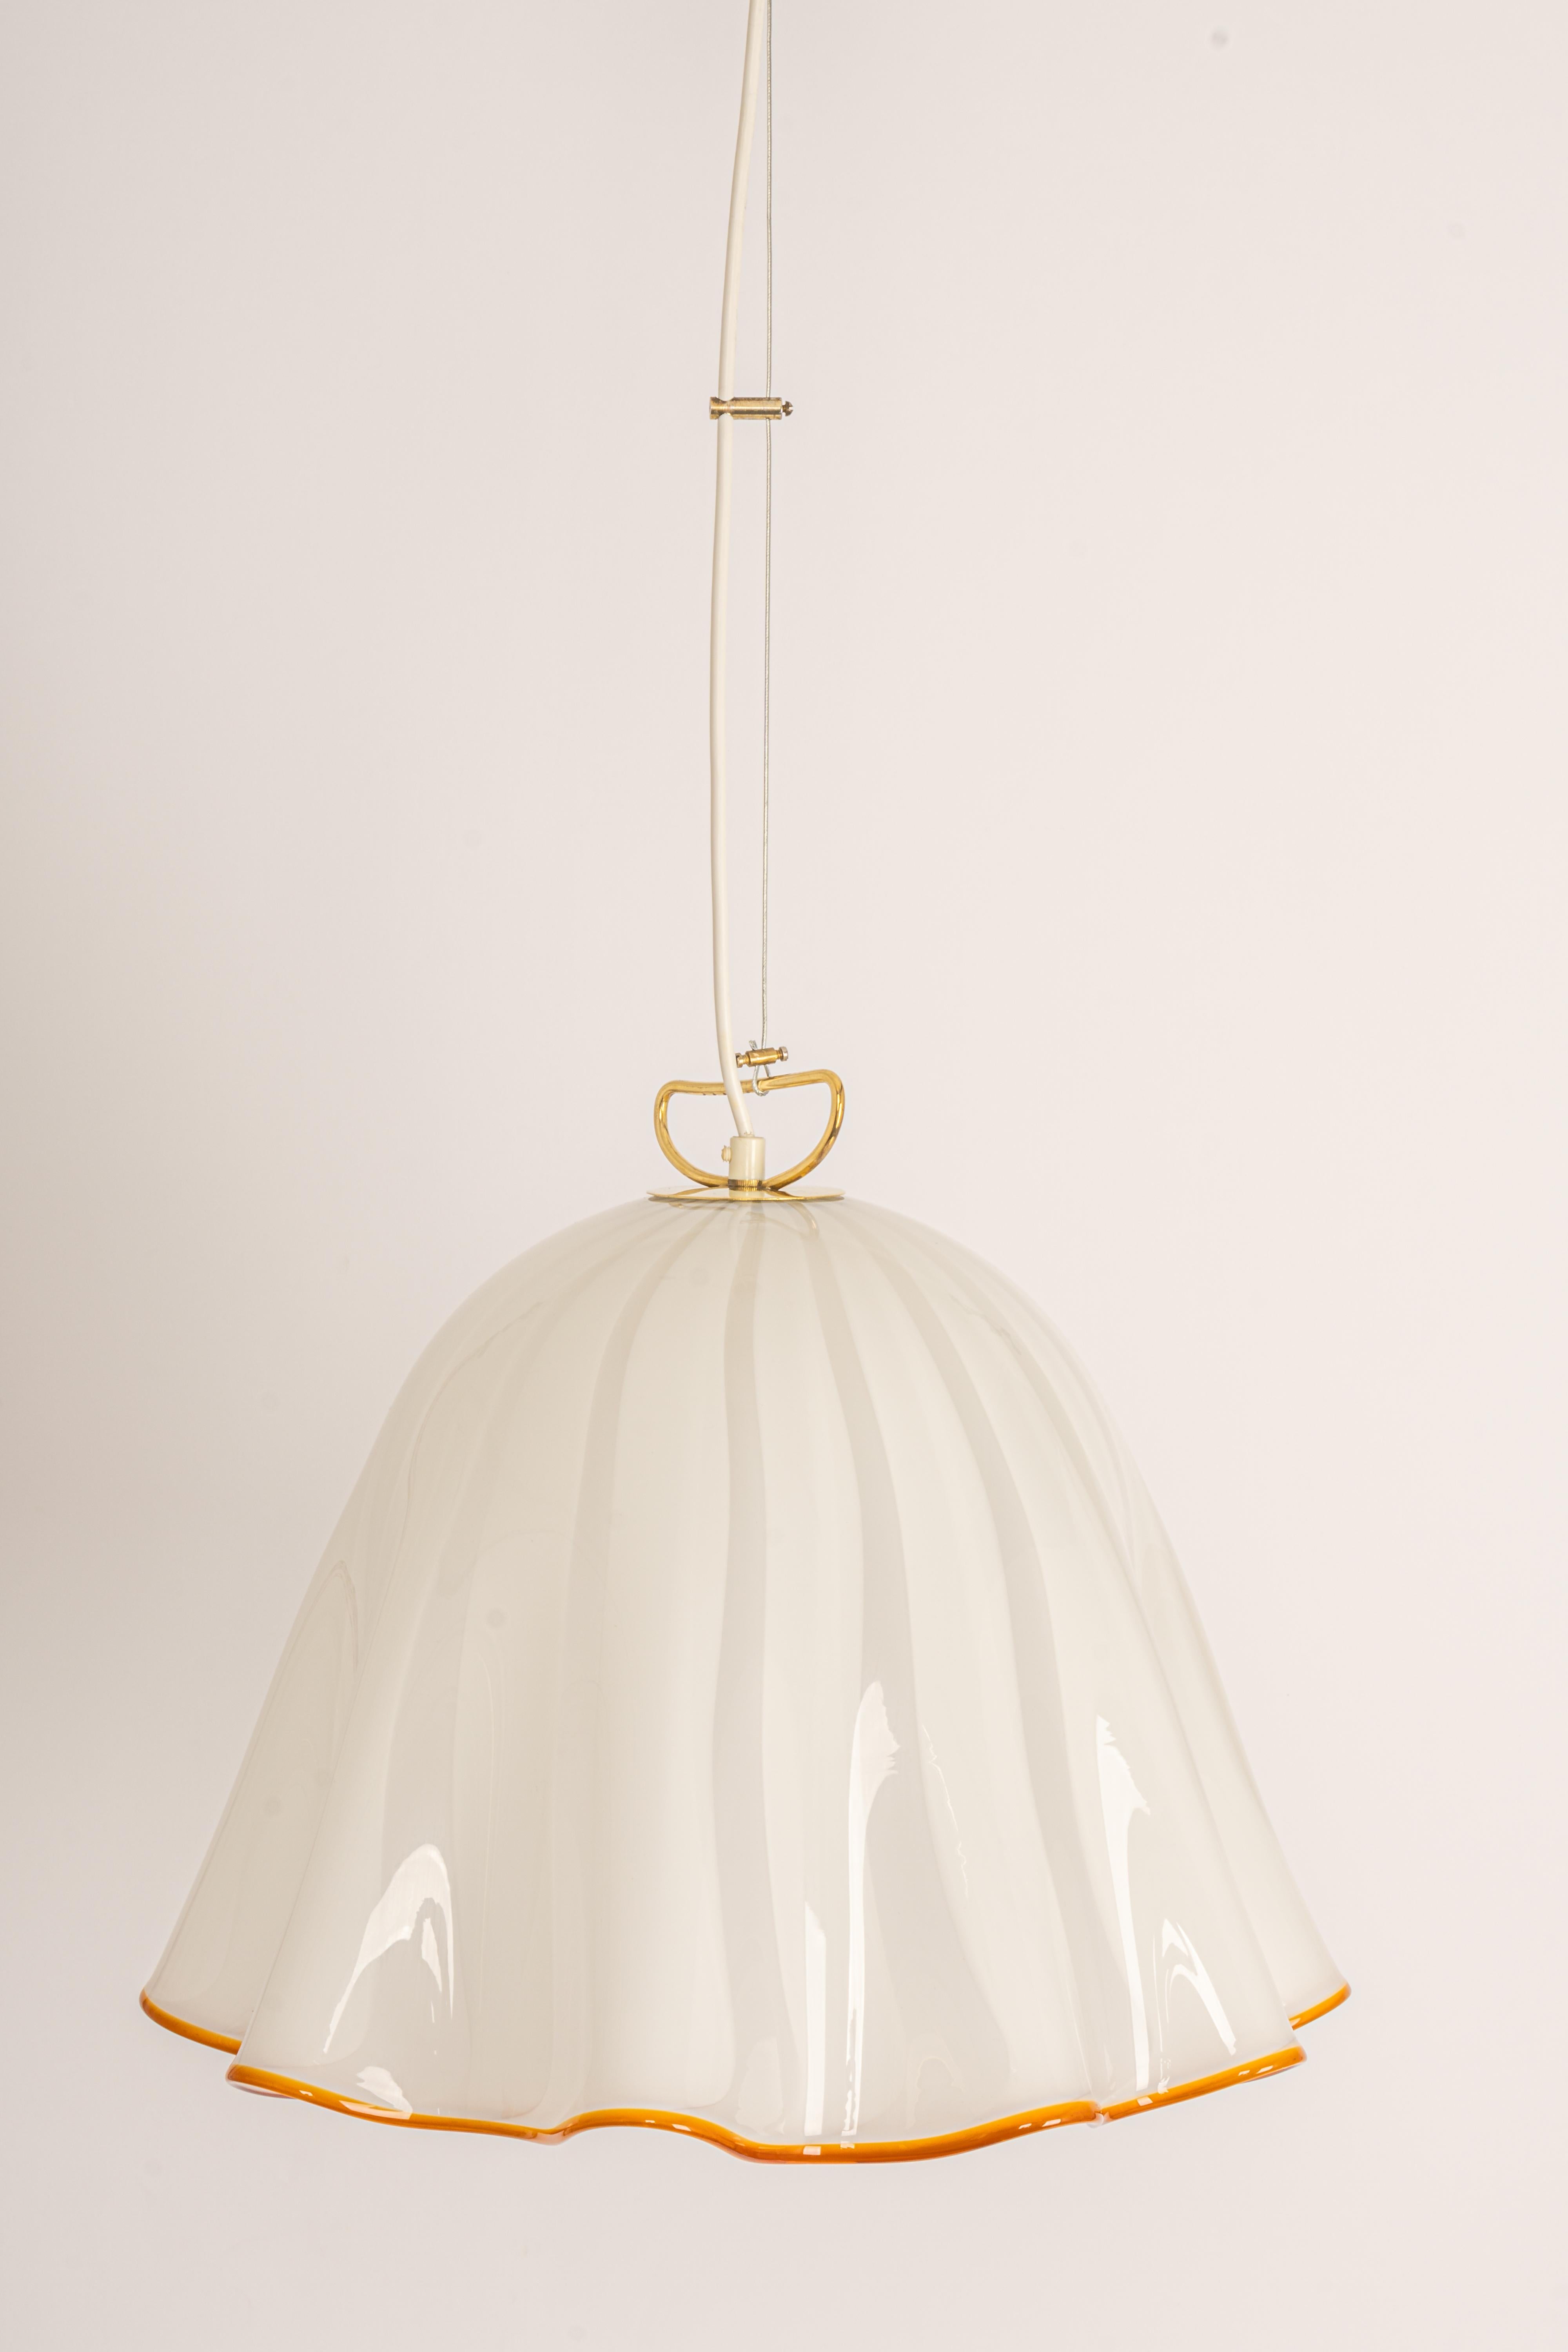 Mid-Century Modern 1 of 2 Large White Glass Pendant Light by Kalmar-Fazzoletto, Austria, 1970s For Sale